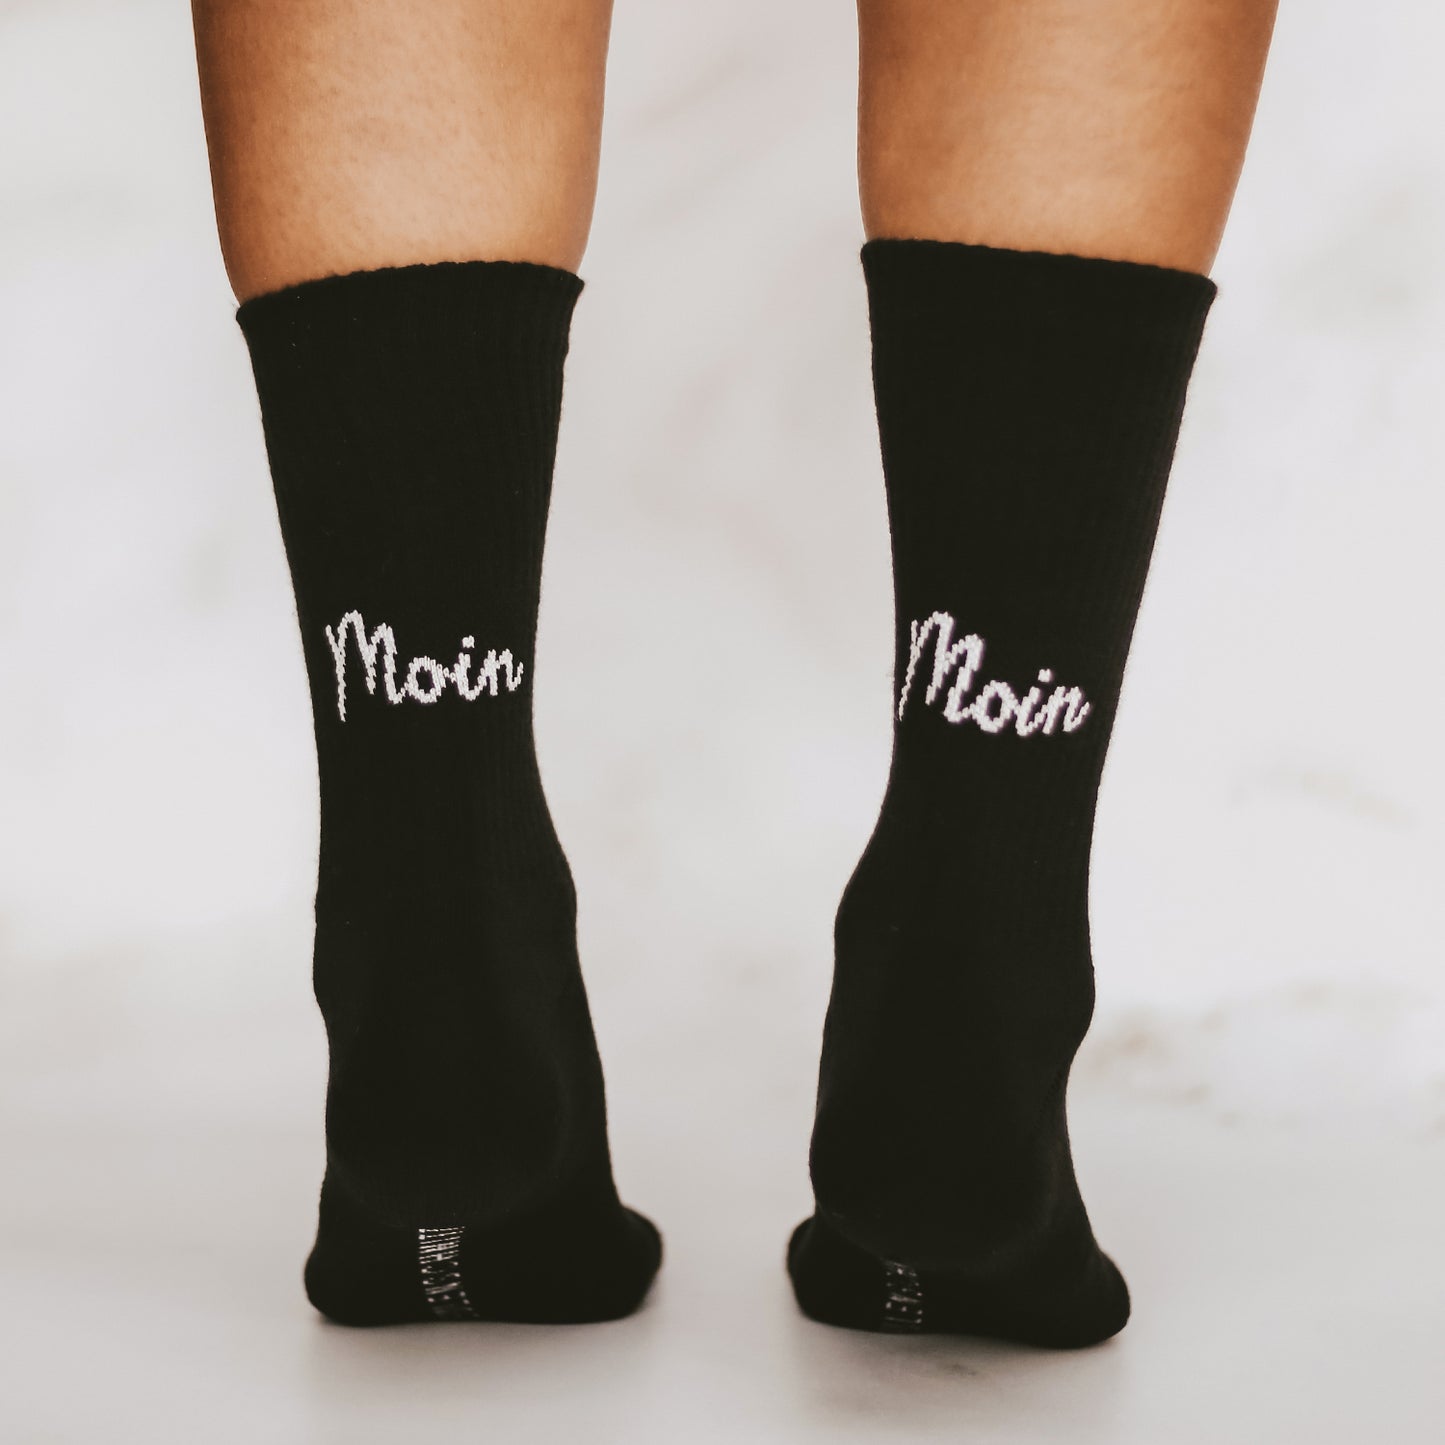 Socken - Moin Moin - 39-42, Schwarz - Socken - Eulenschnitt